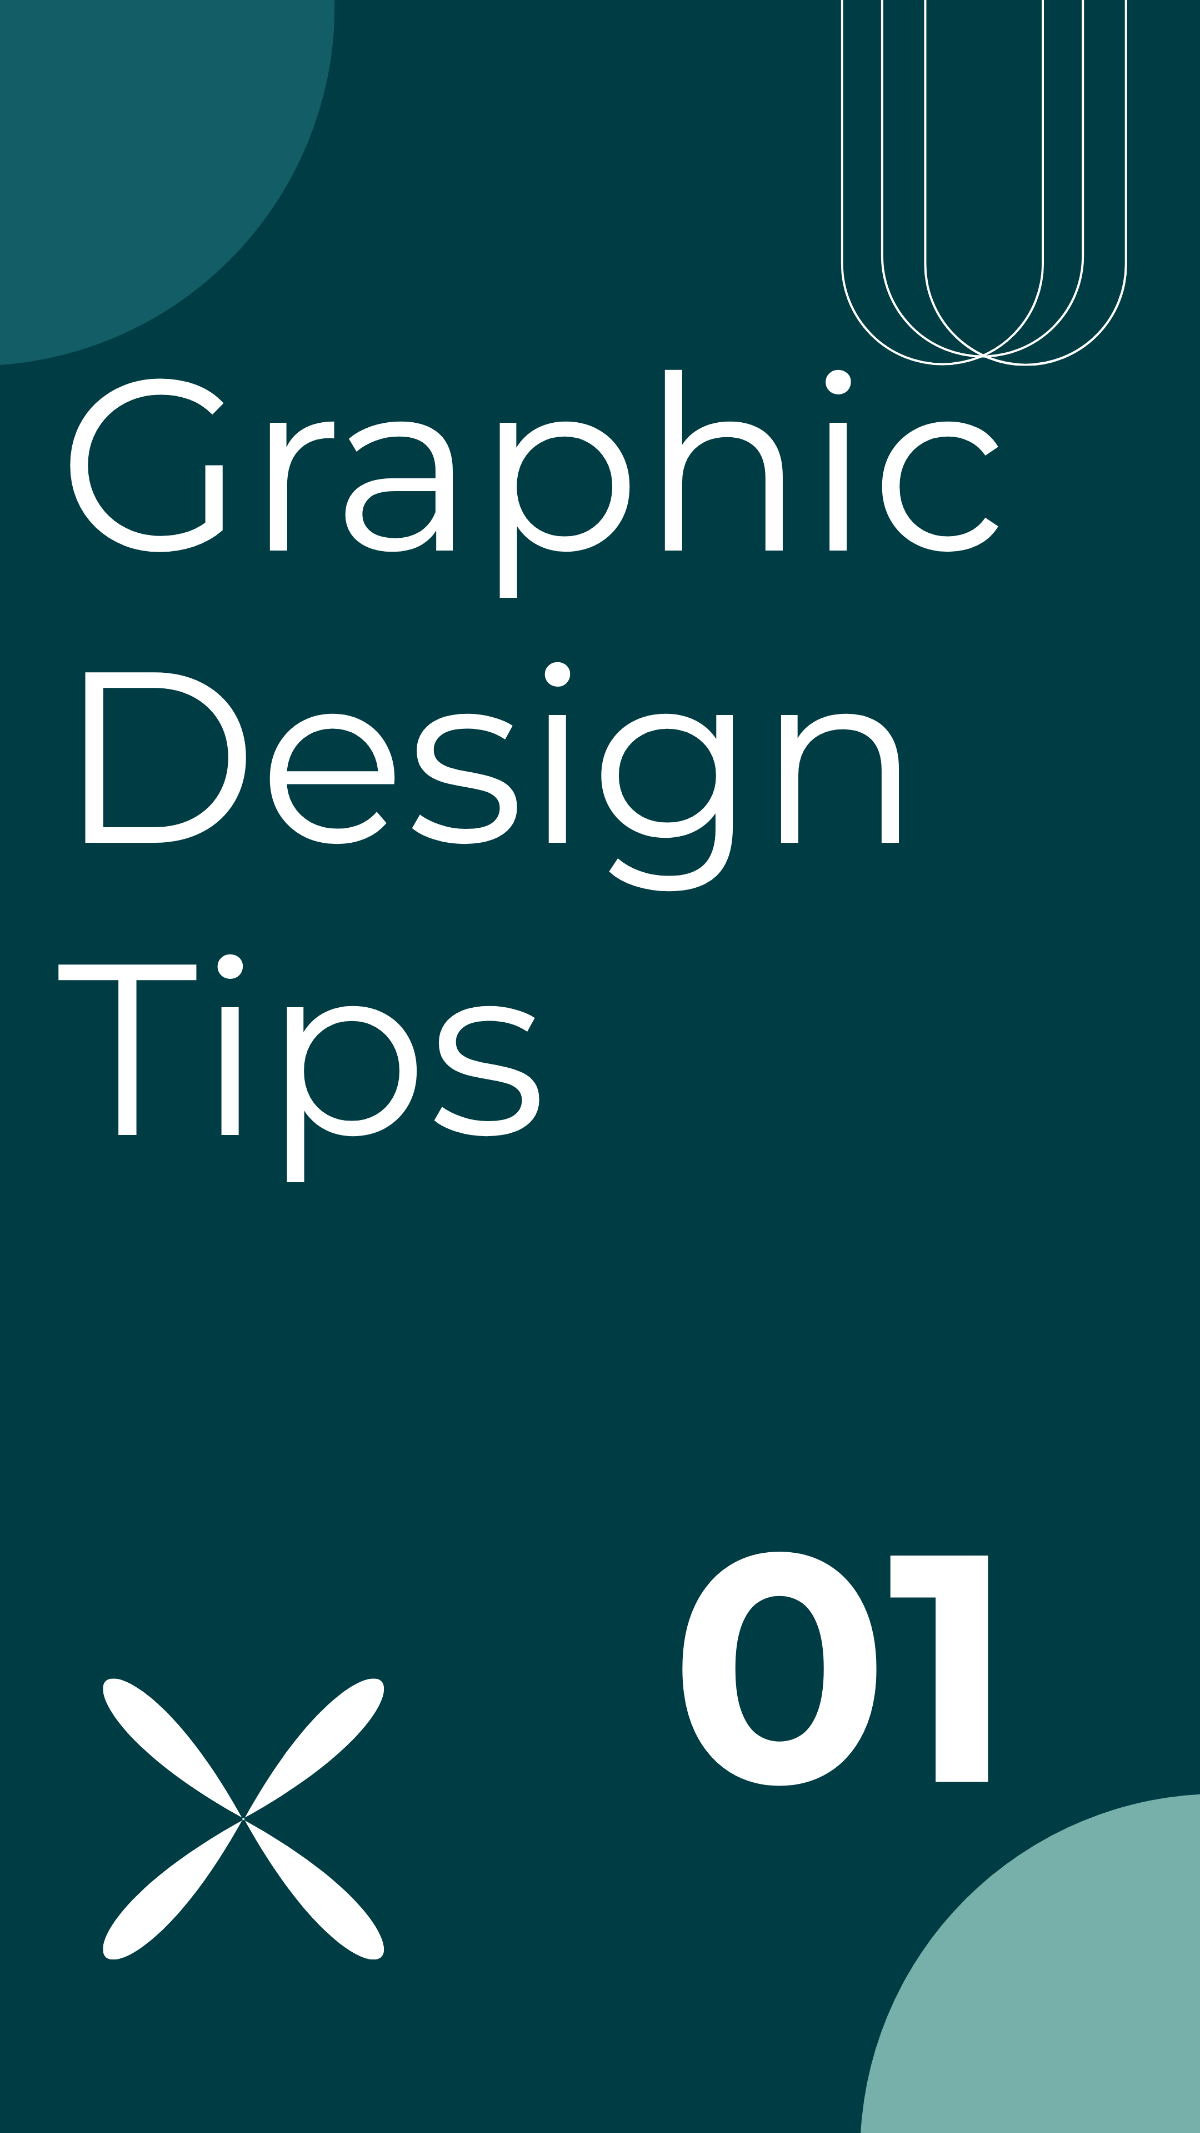 Graphic Design Tips Instagram Carousel Post Template